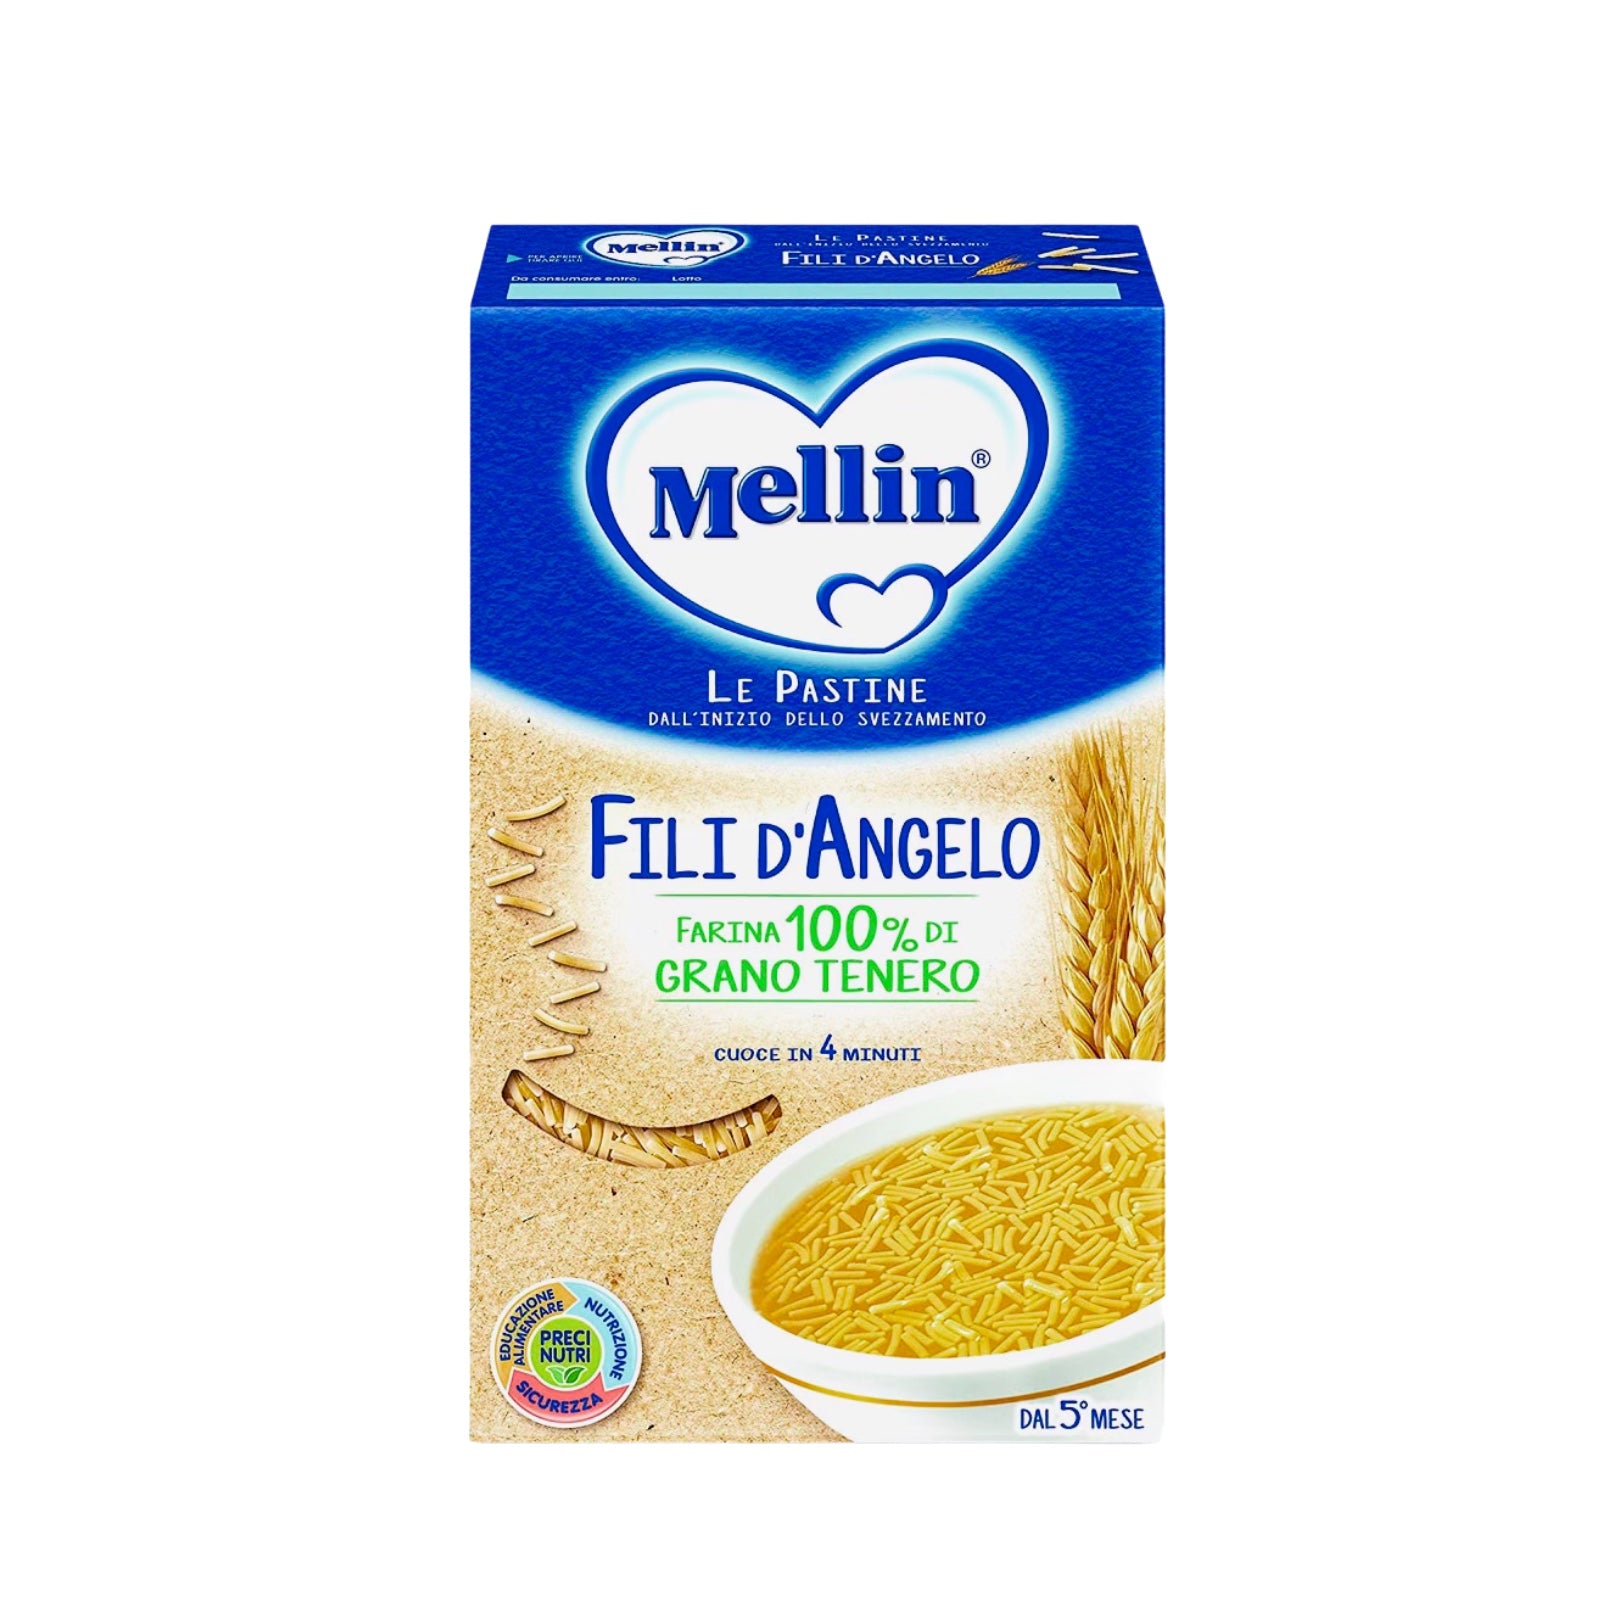 Sanitaria Magnolia - Nuovi formati di pastina MELLIN 🥰 @mellin_official # pastina #bimbomio #bimbifelici #pranzo #cena #pastaitaliana